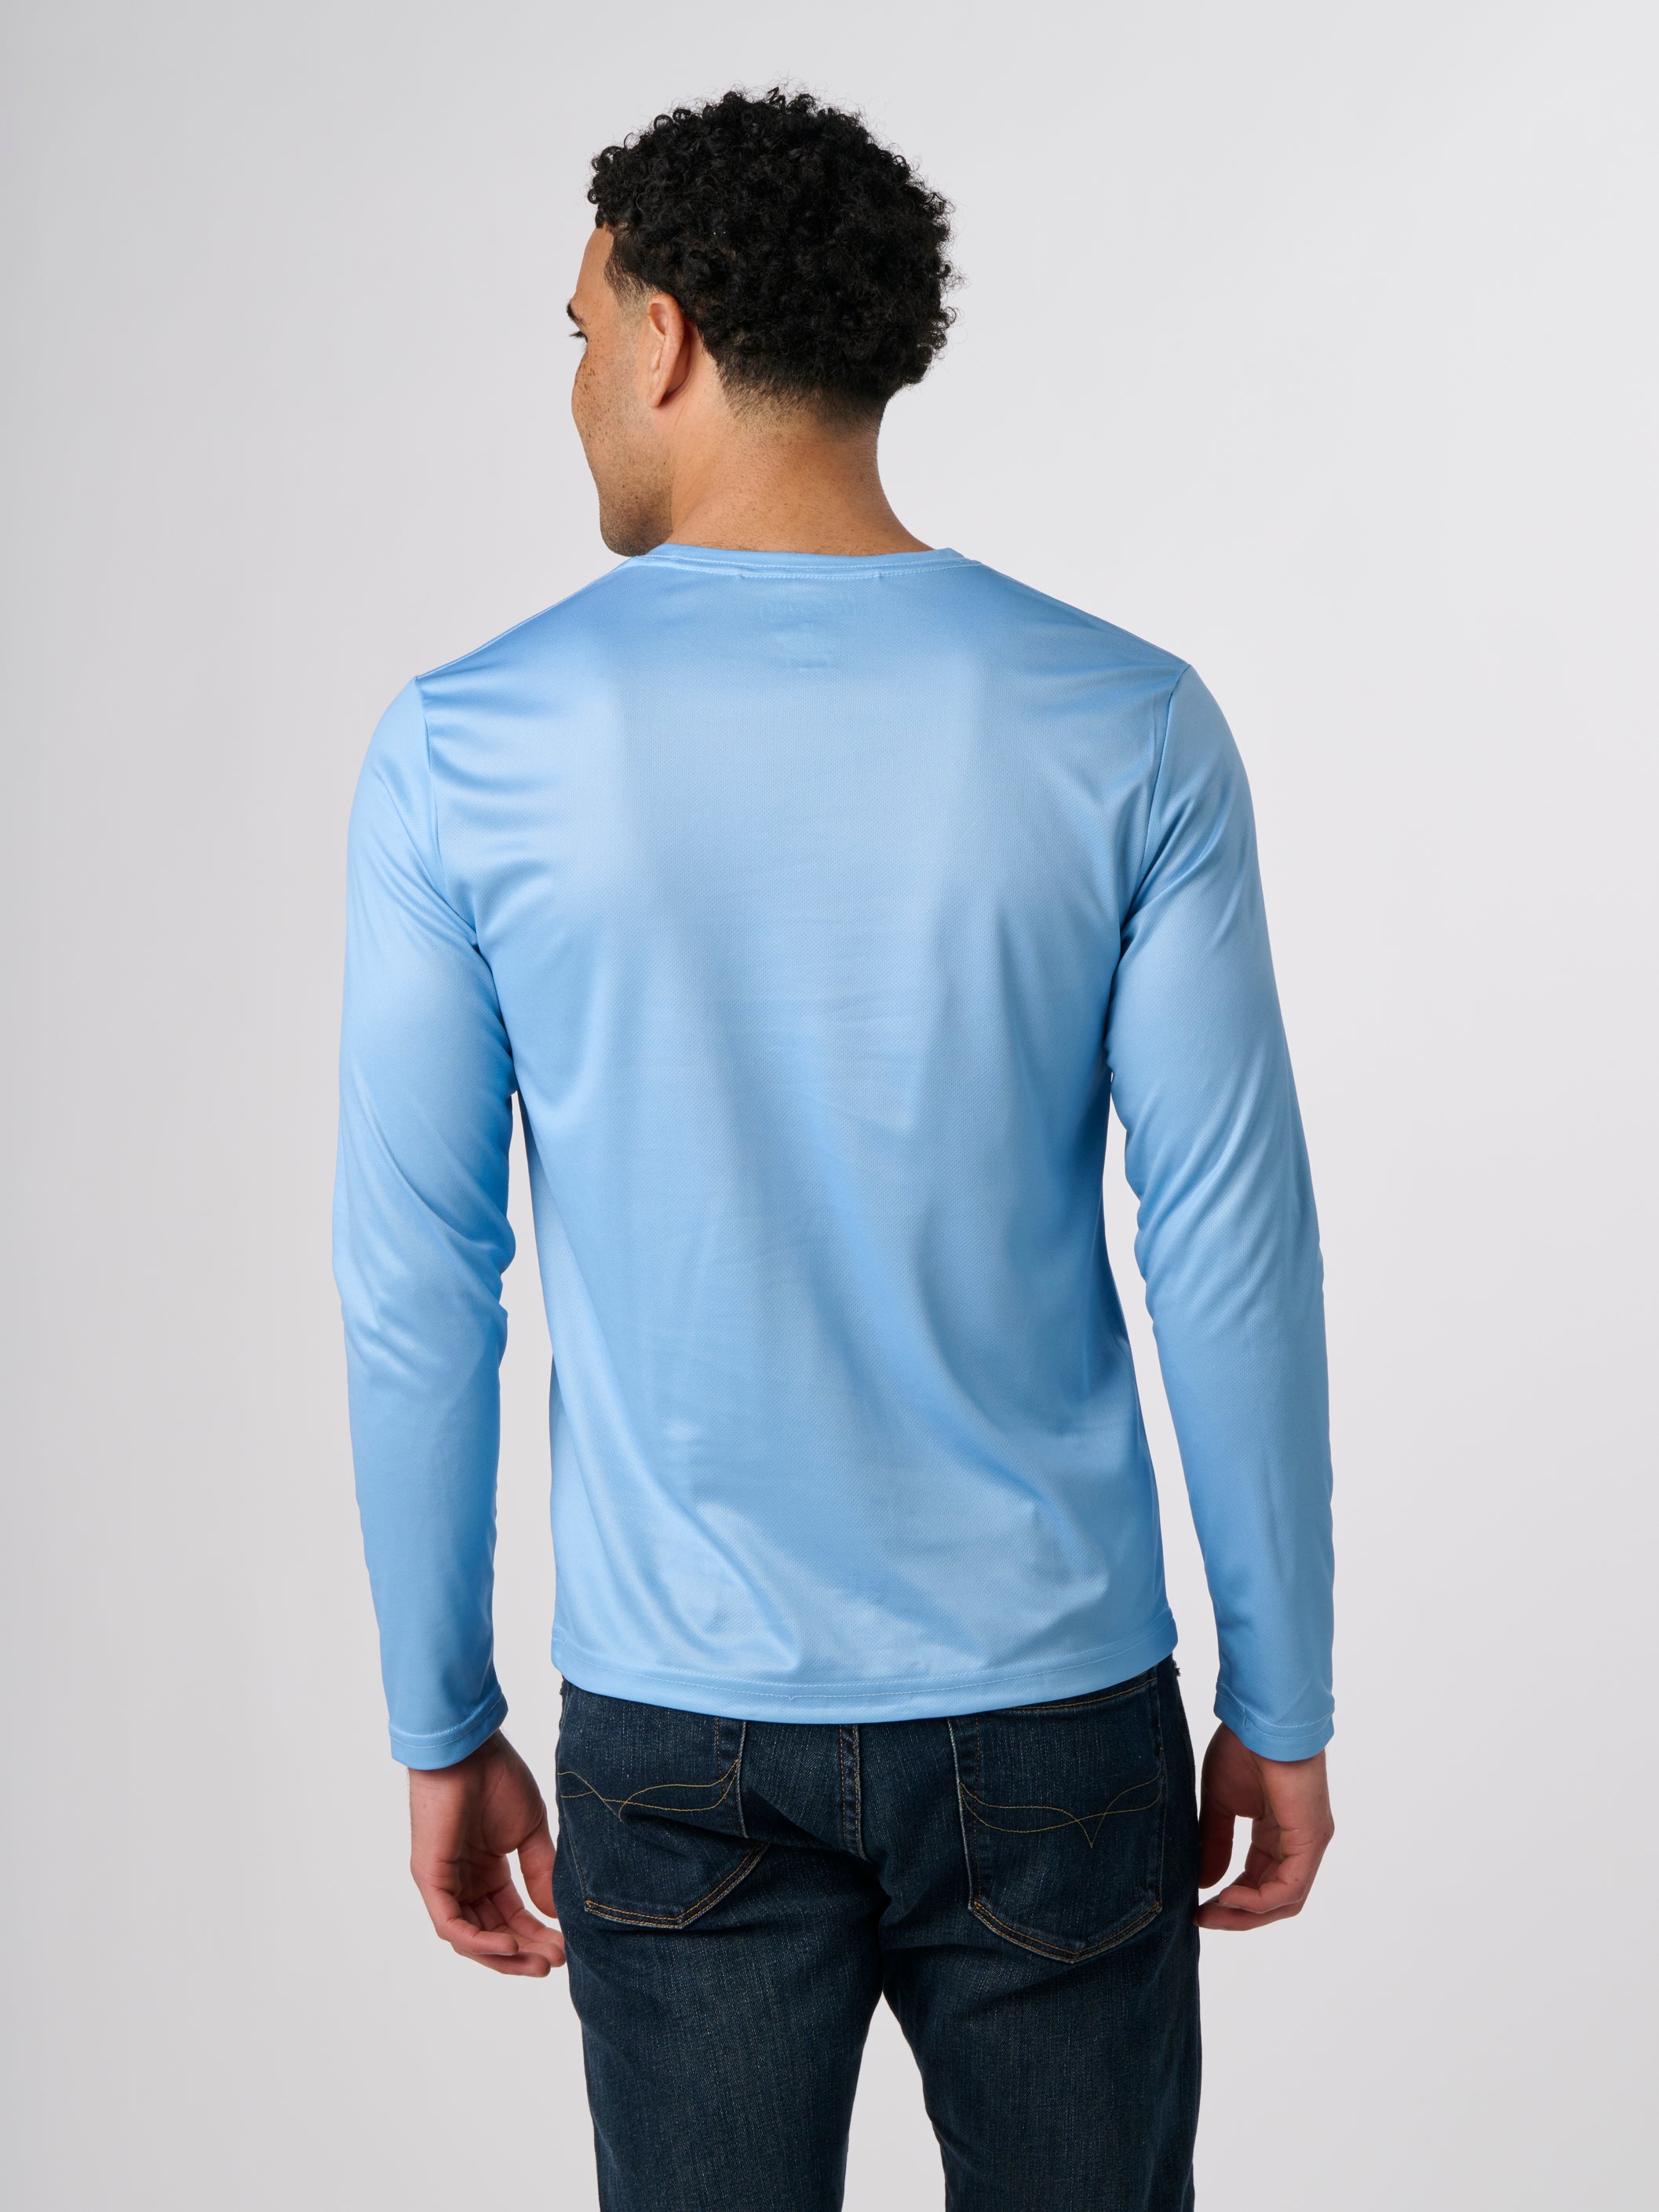 SE1001 - Sport Elite Long Sleeve T-Shirt